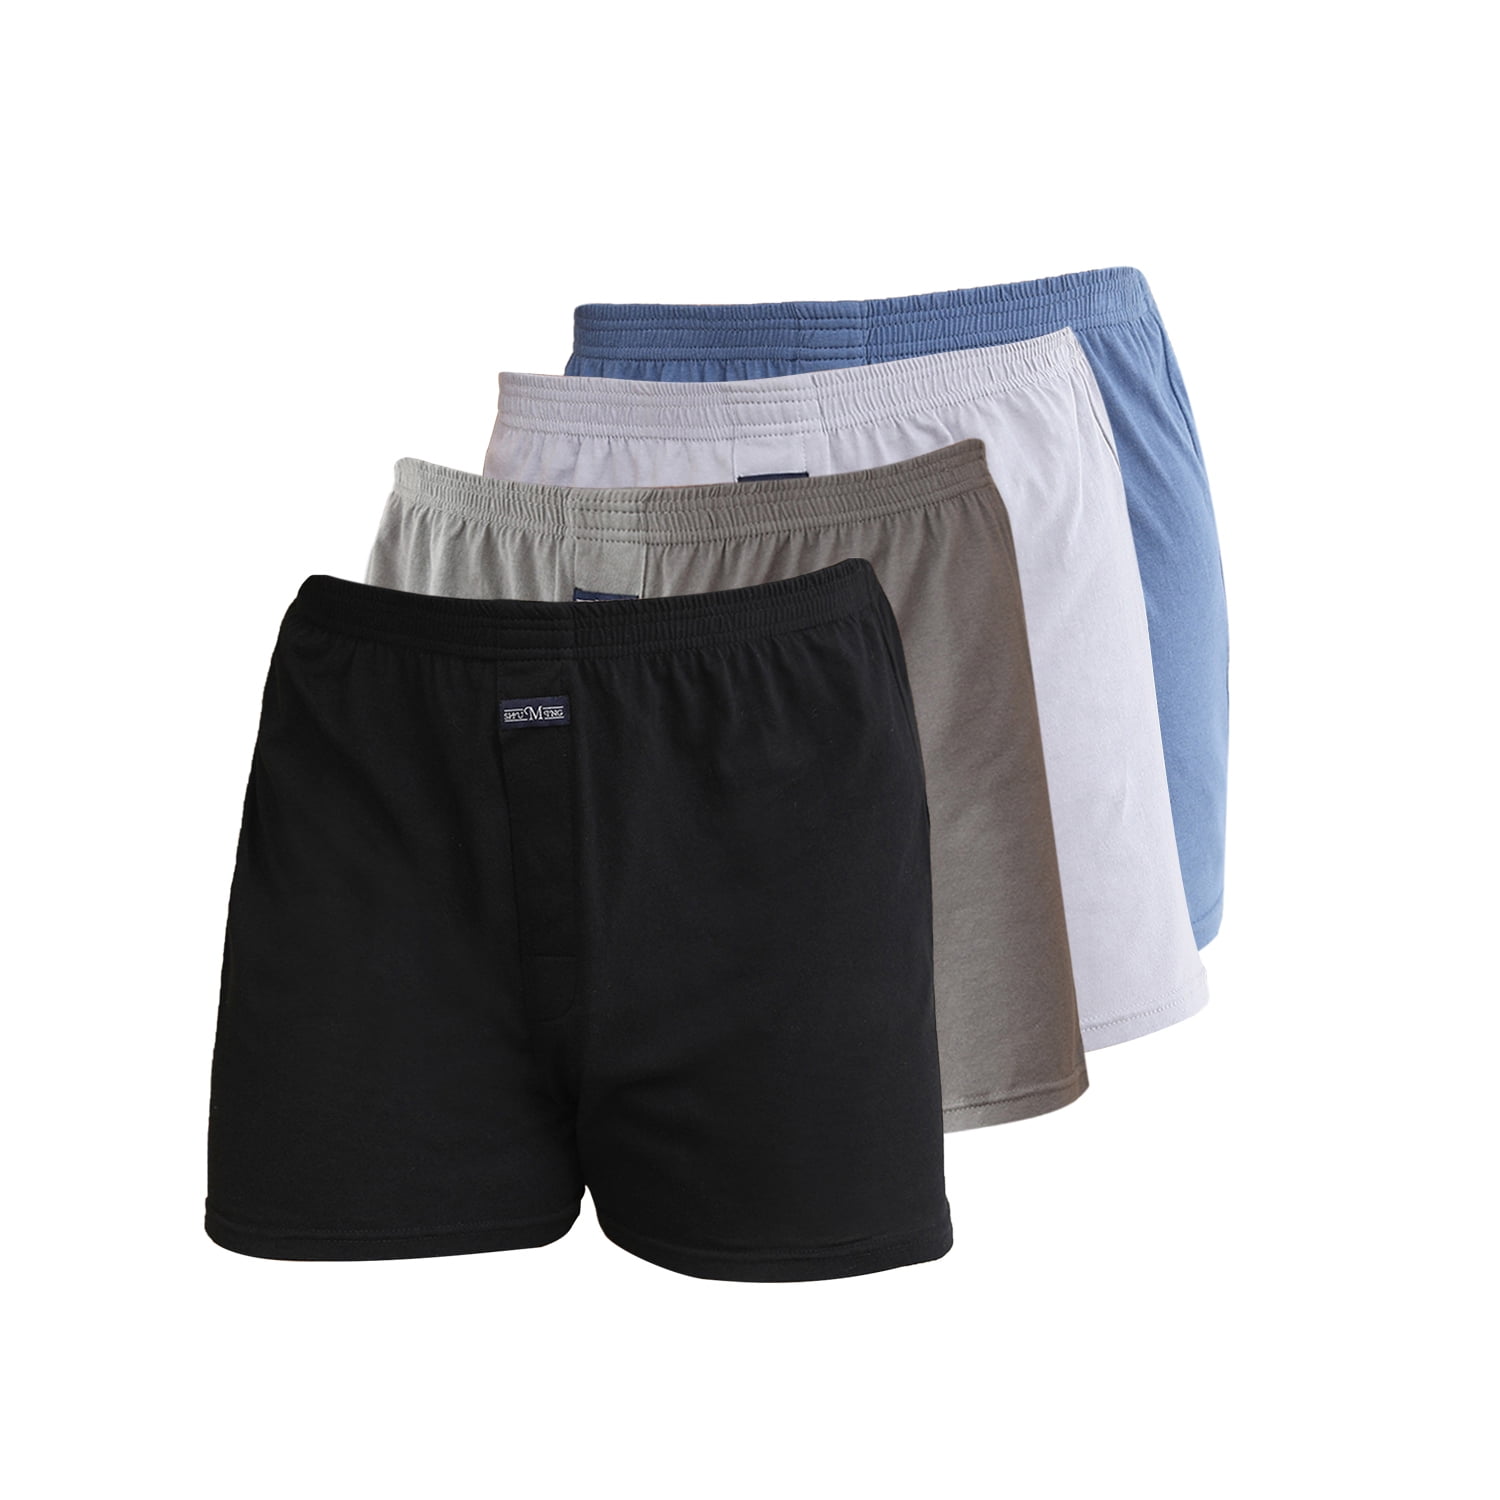 Kamo Men’s Underwear Boxer Soft Cotton Knit Mens Boxer Shorts Underwear ...